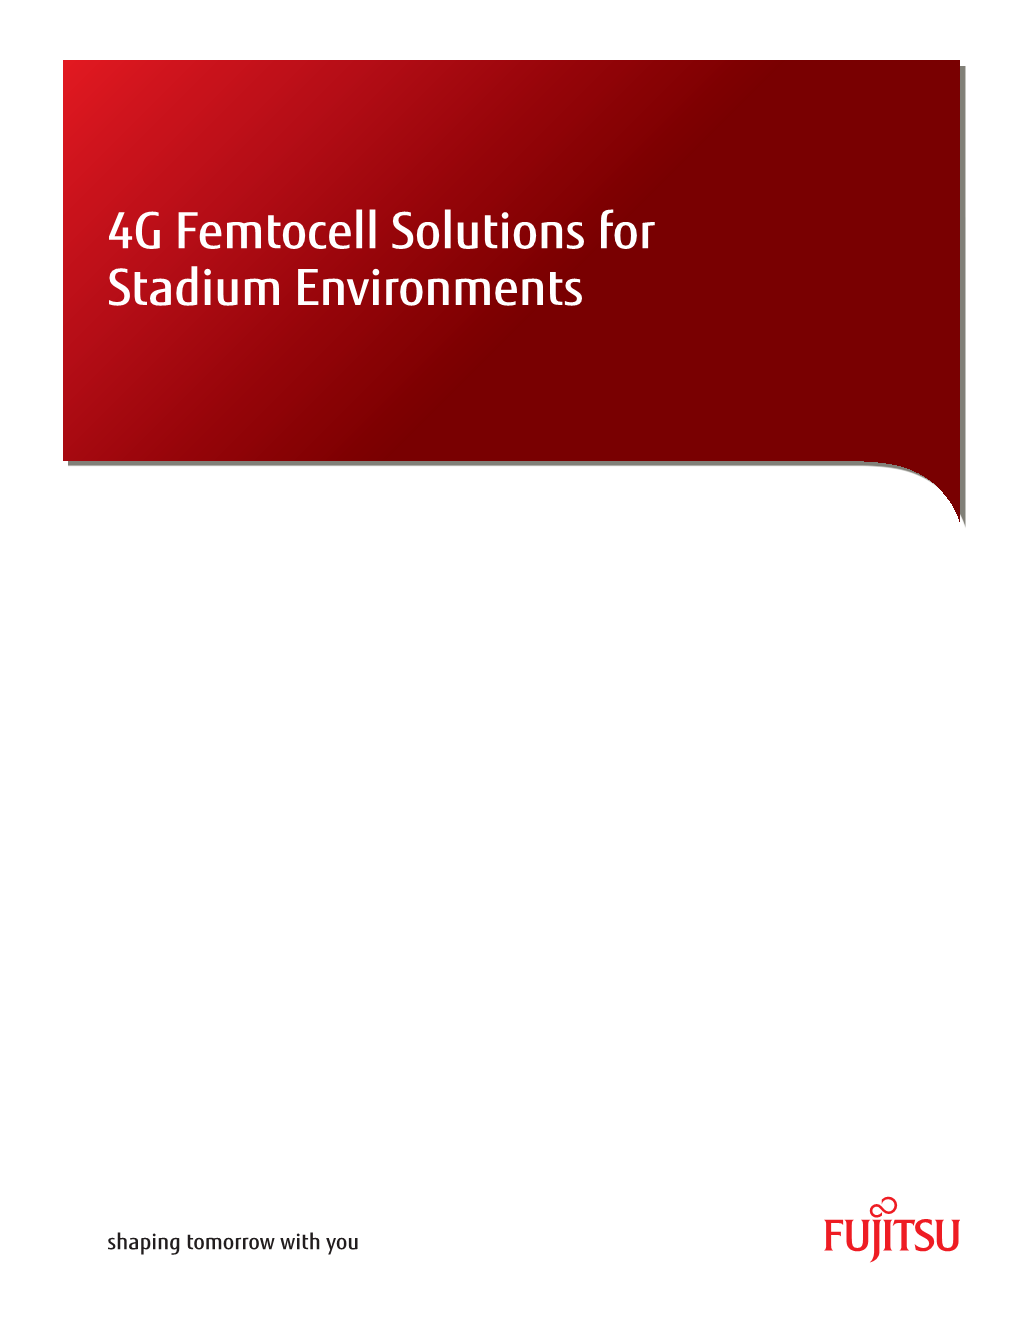 4G Femtocell Solutions for Stadium Environments